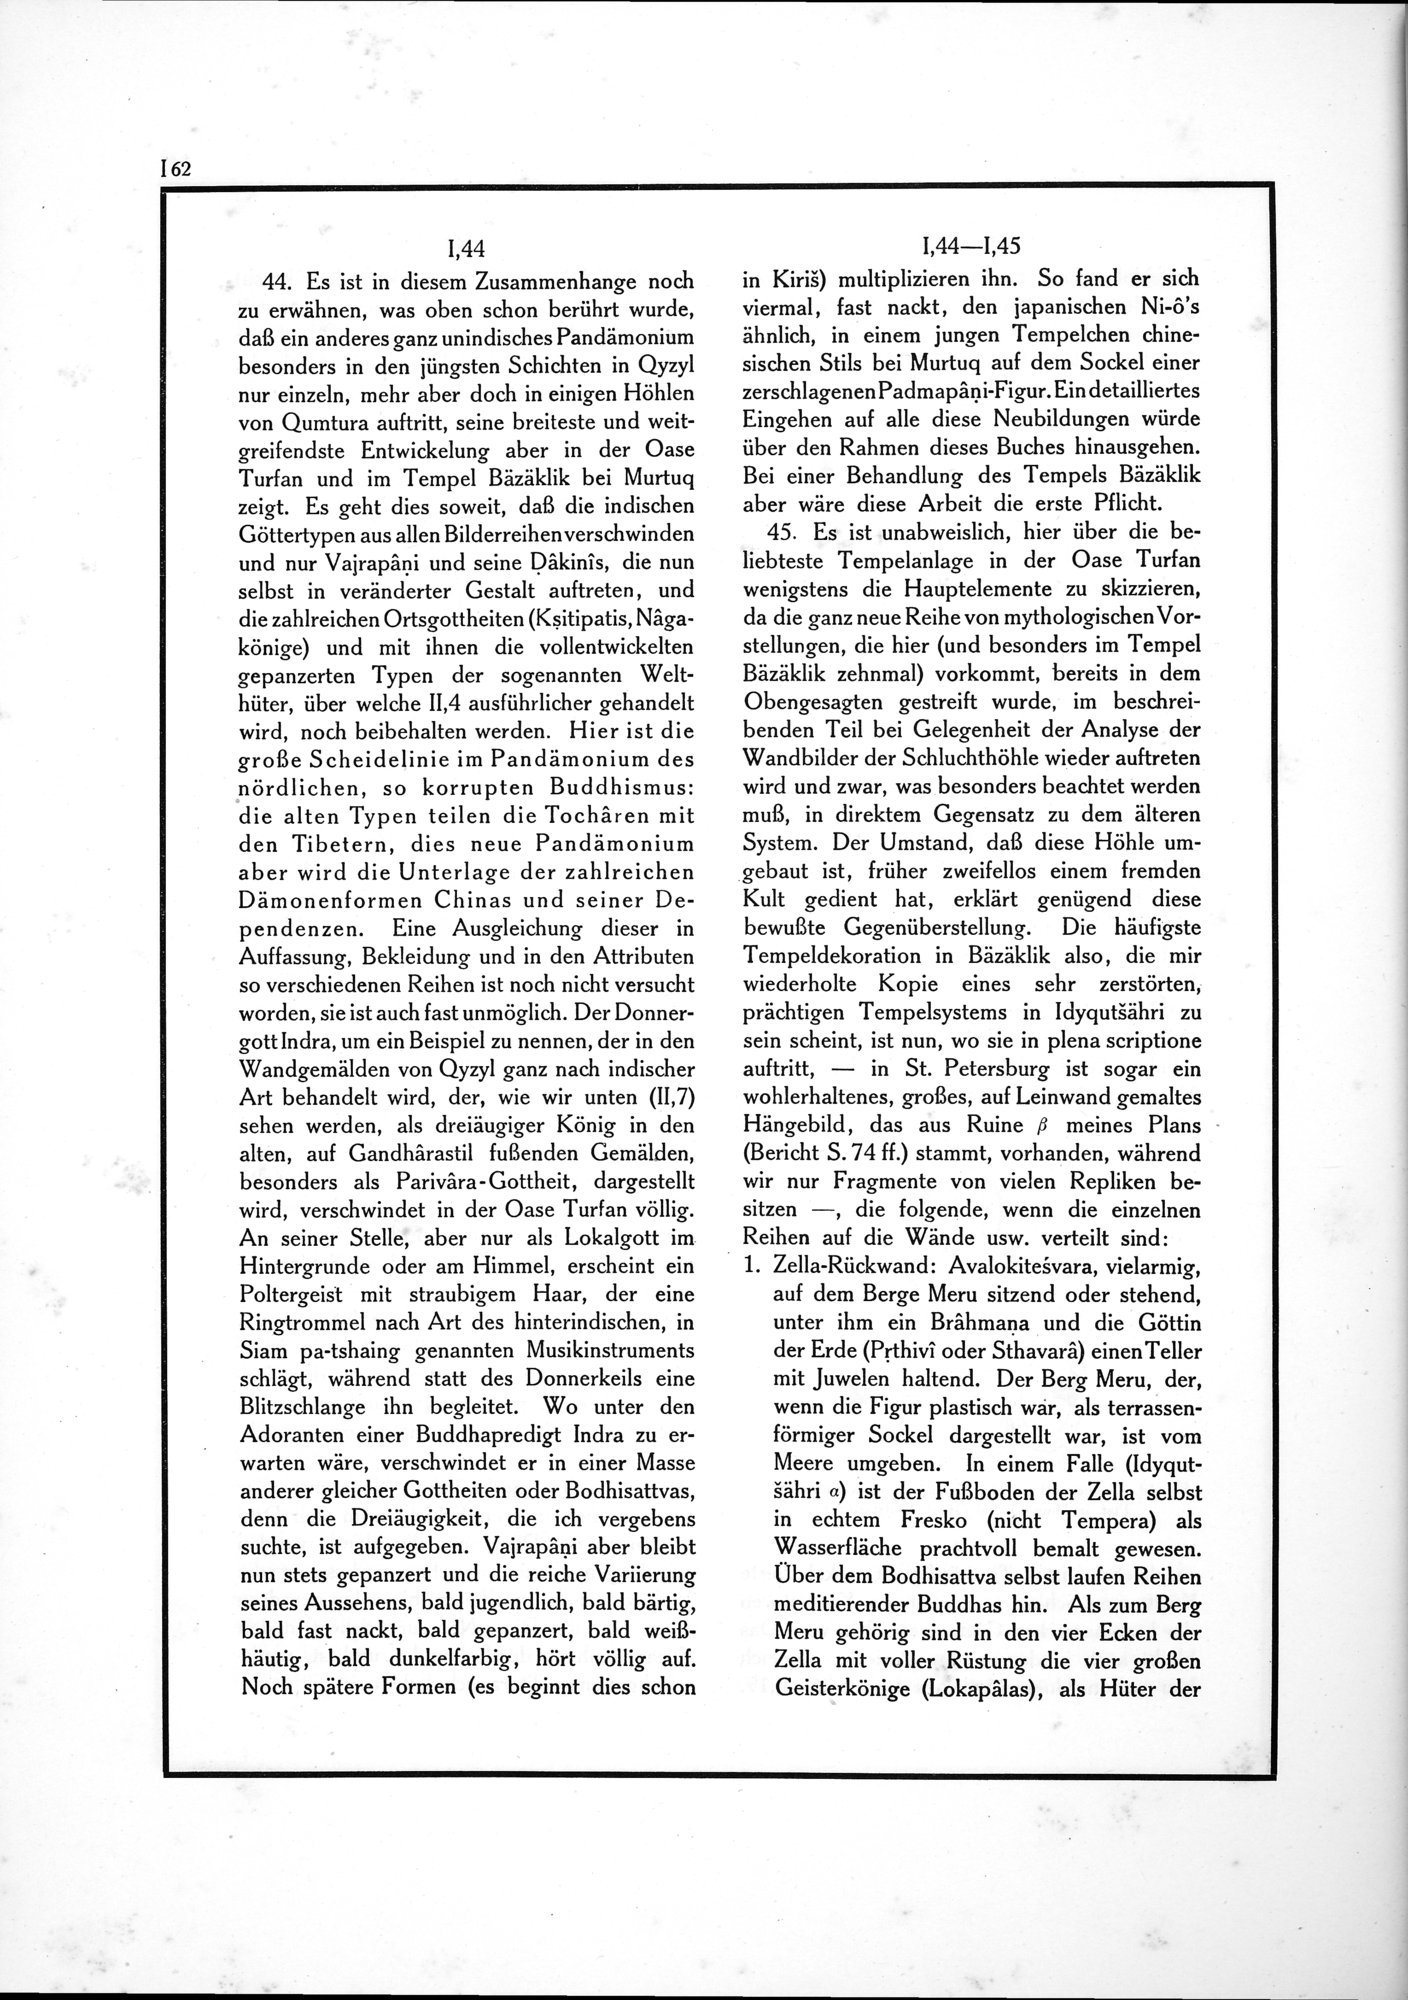 Alt-Kutscha : vol.1 / Page 74 (Grayscale High Resolution Image)